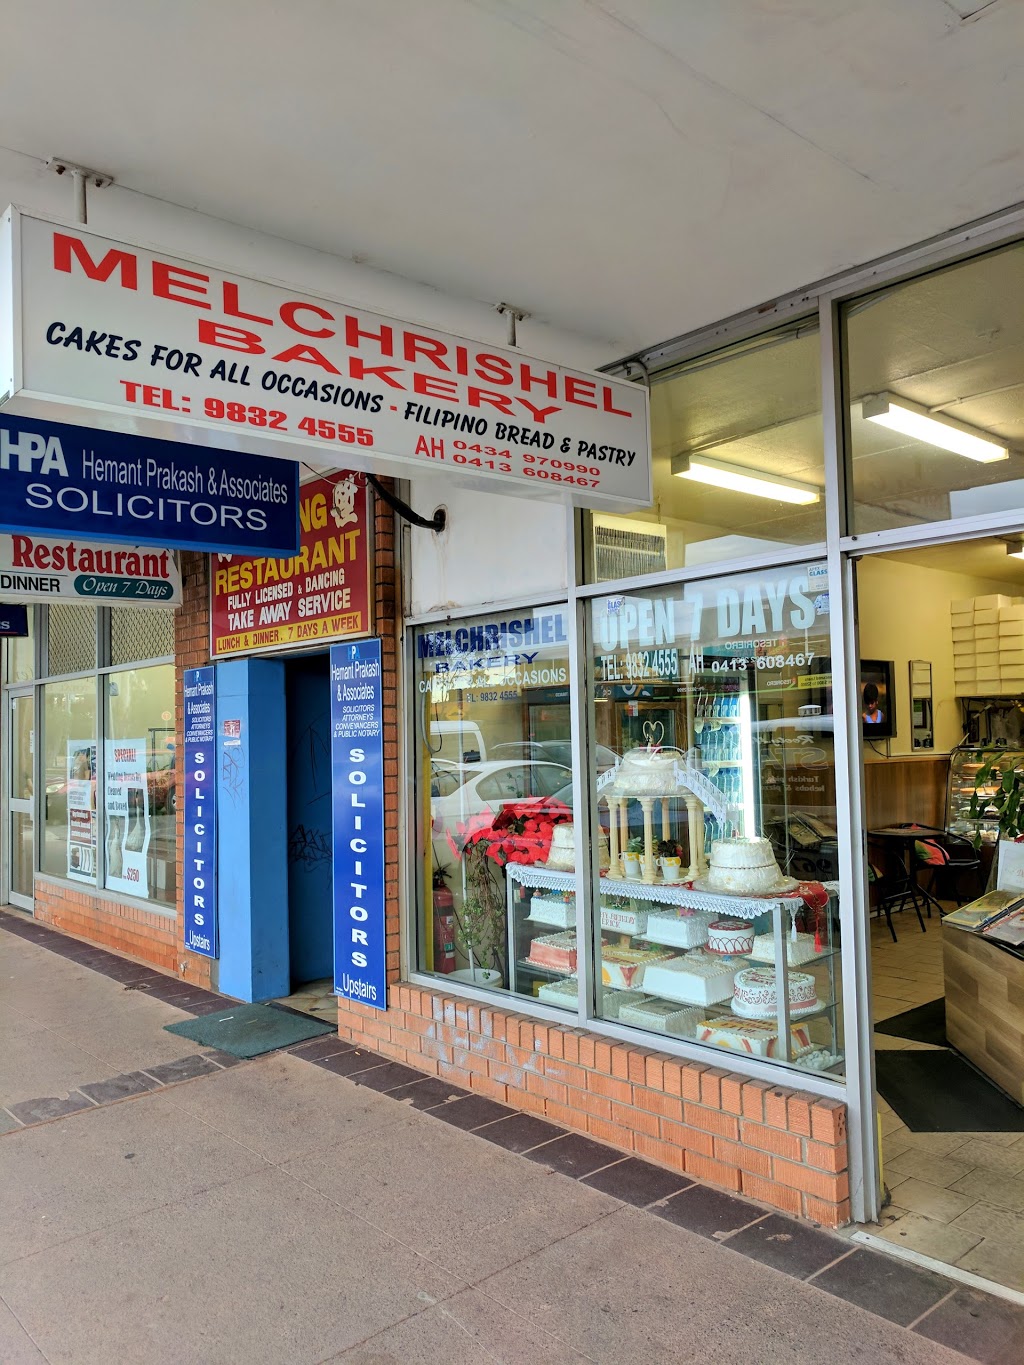 Melchrishel Bakery | bakery | 23 Rooty Hill Rd N, Rooty Hill NSW 2766, Australia | 0298324555 OR +61 2 9832 4555